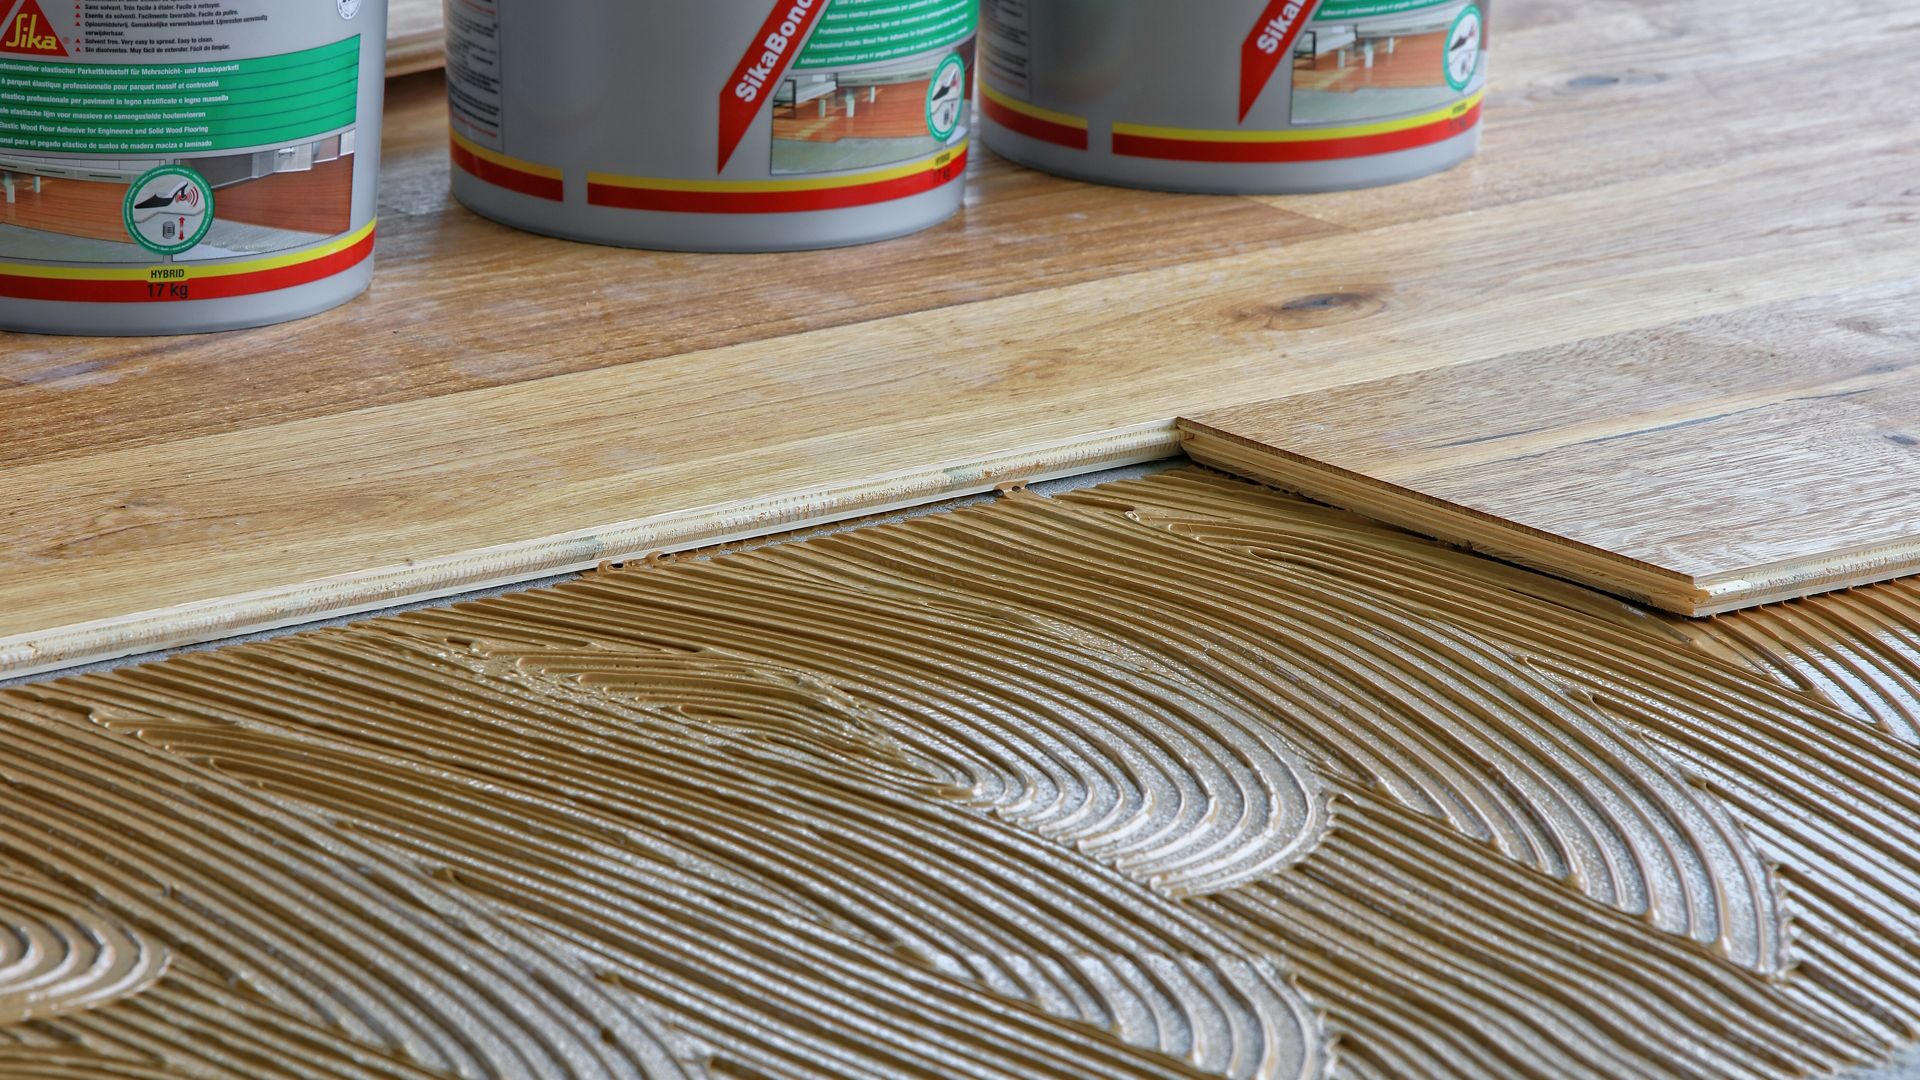 Wood floor bonding with SikaBond adhesive